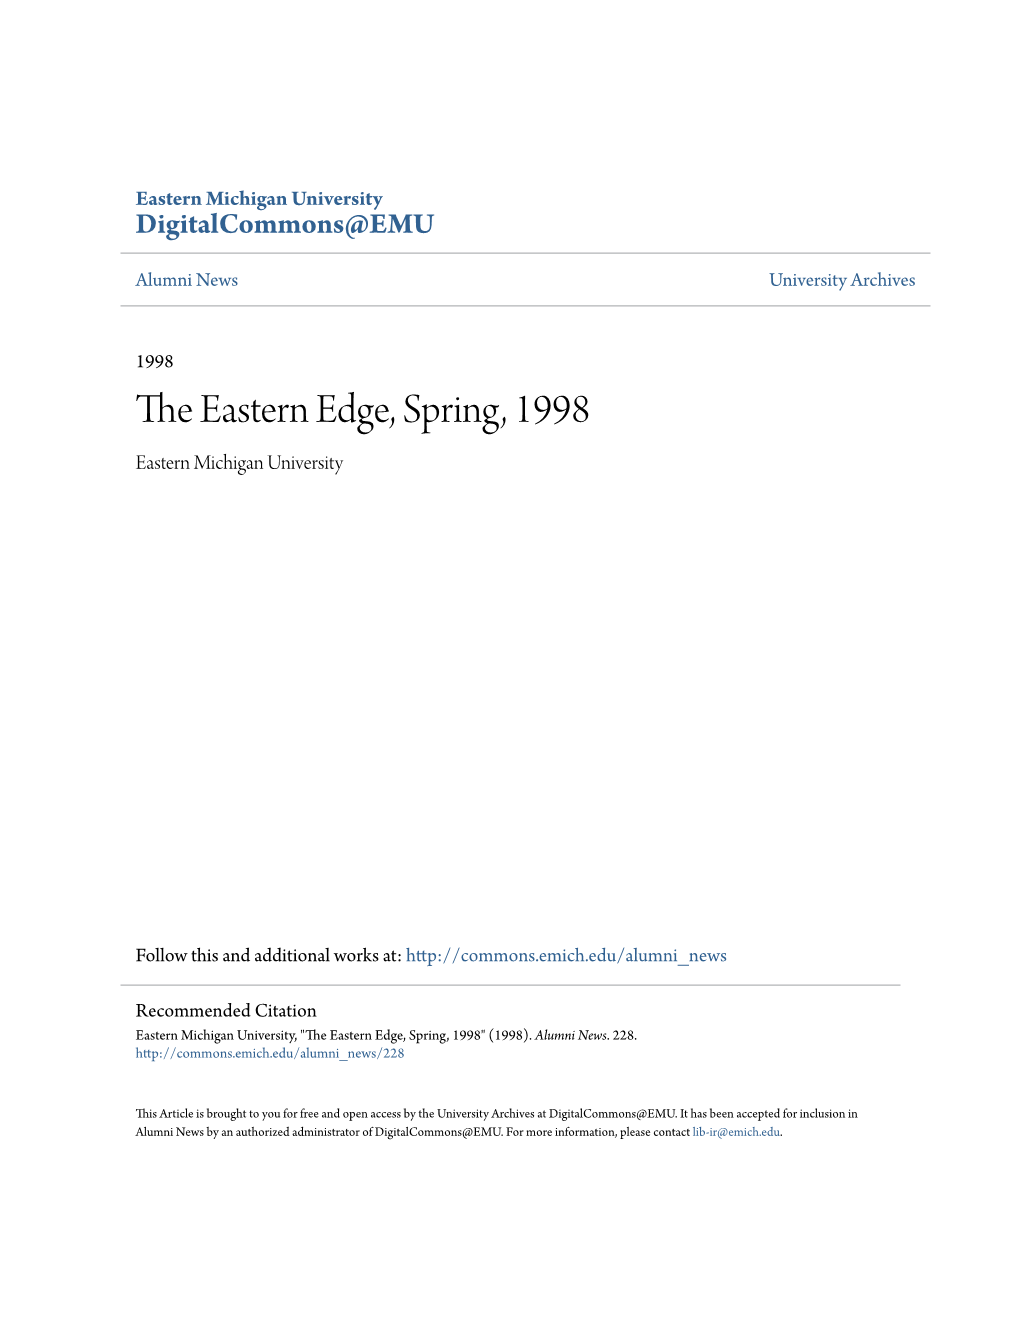 The Eastern Edge, Spring, 1998" (1998)